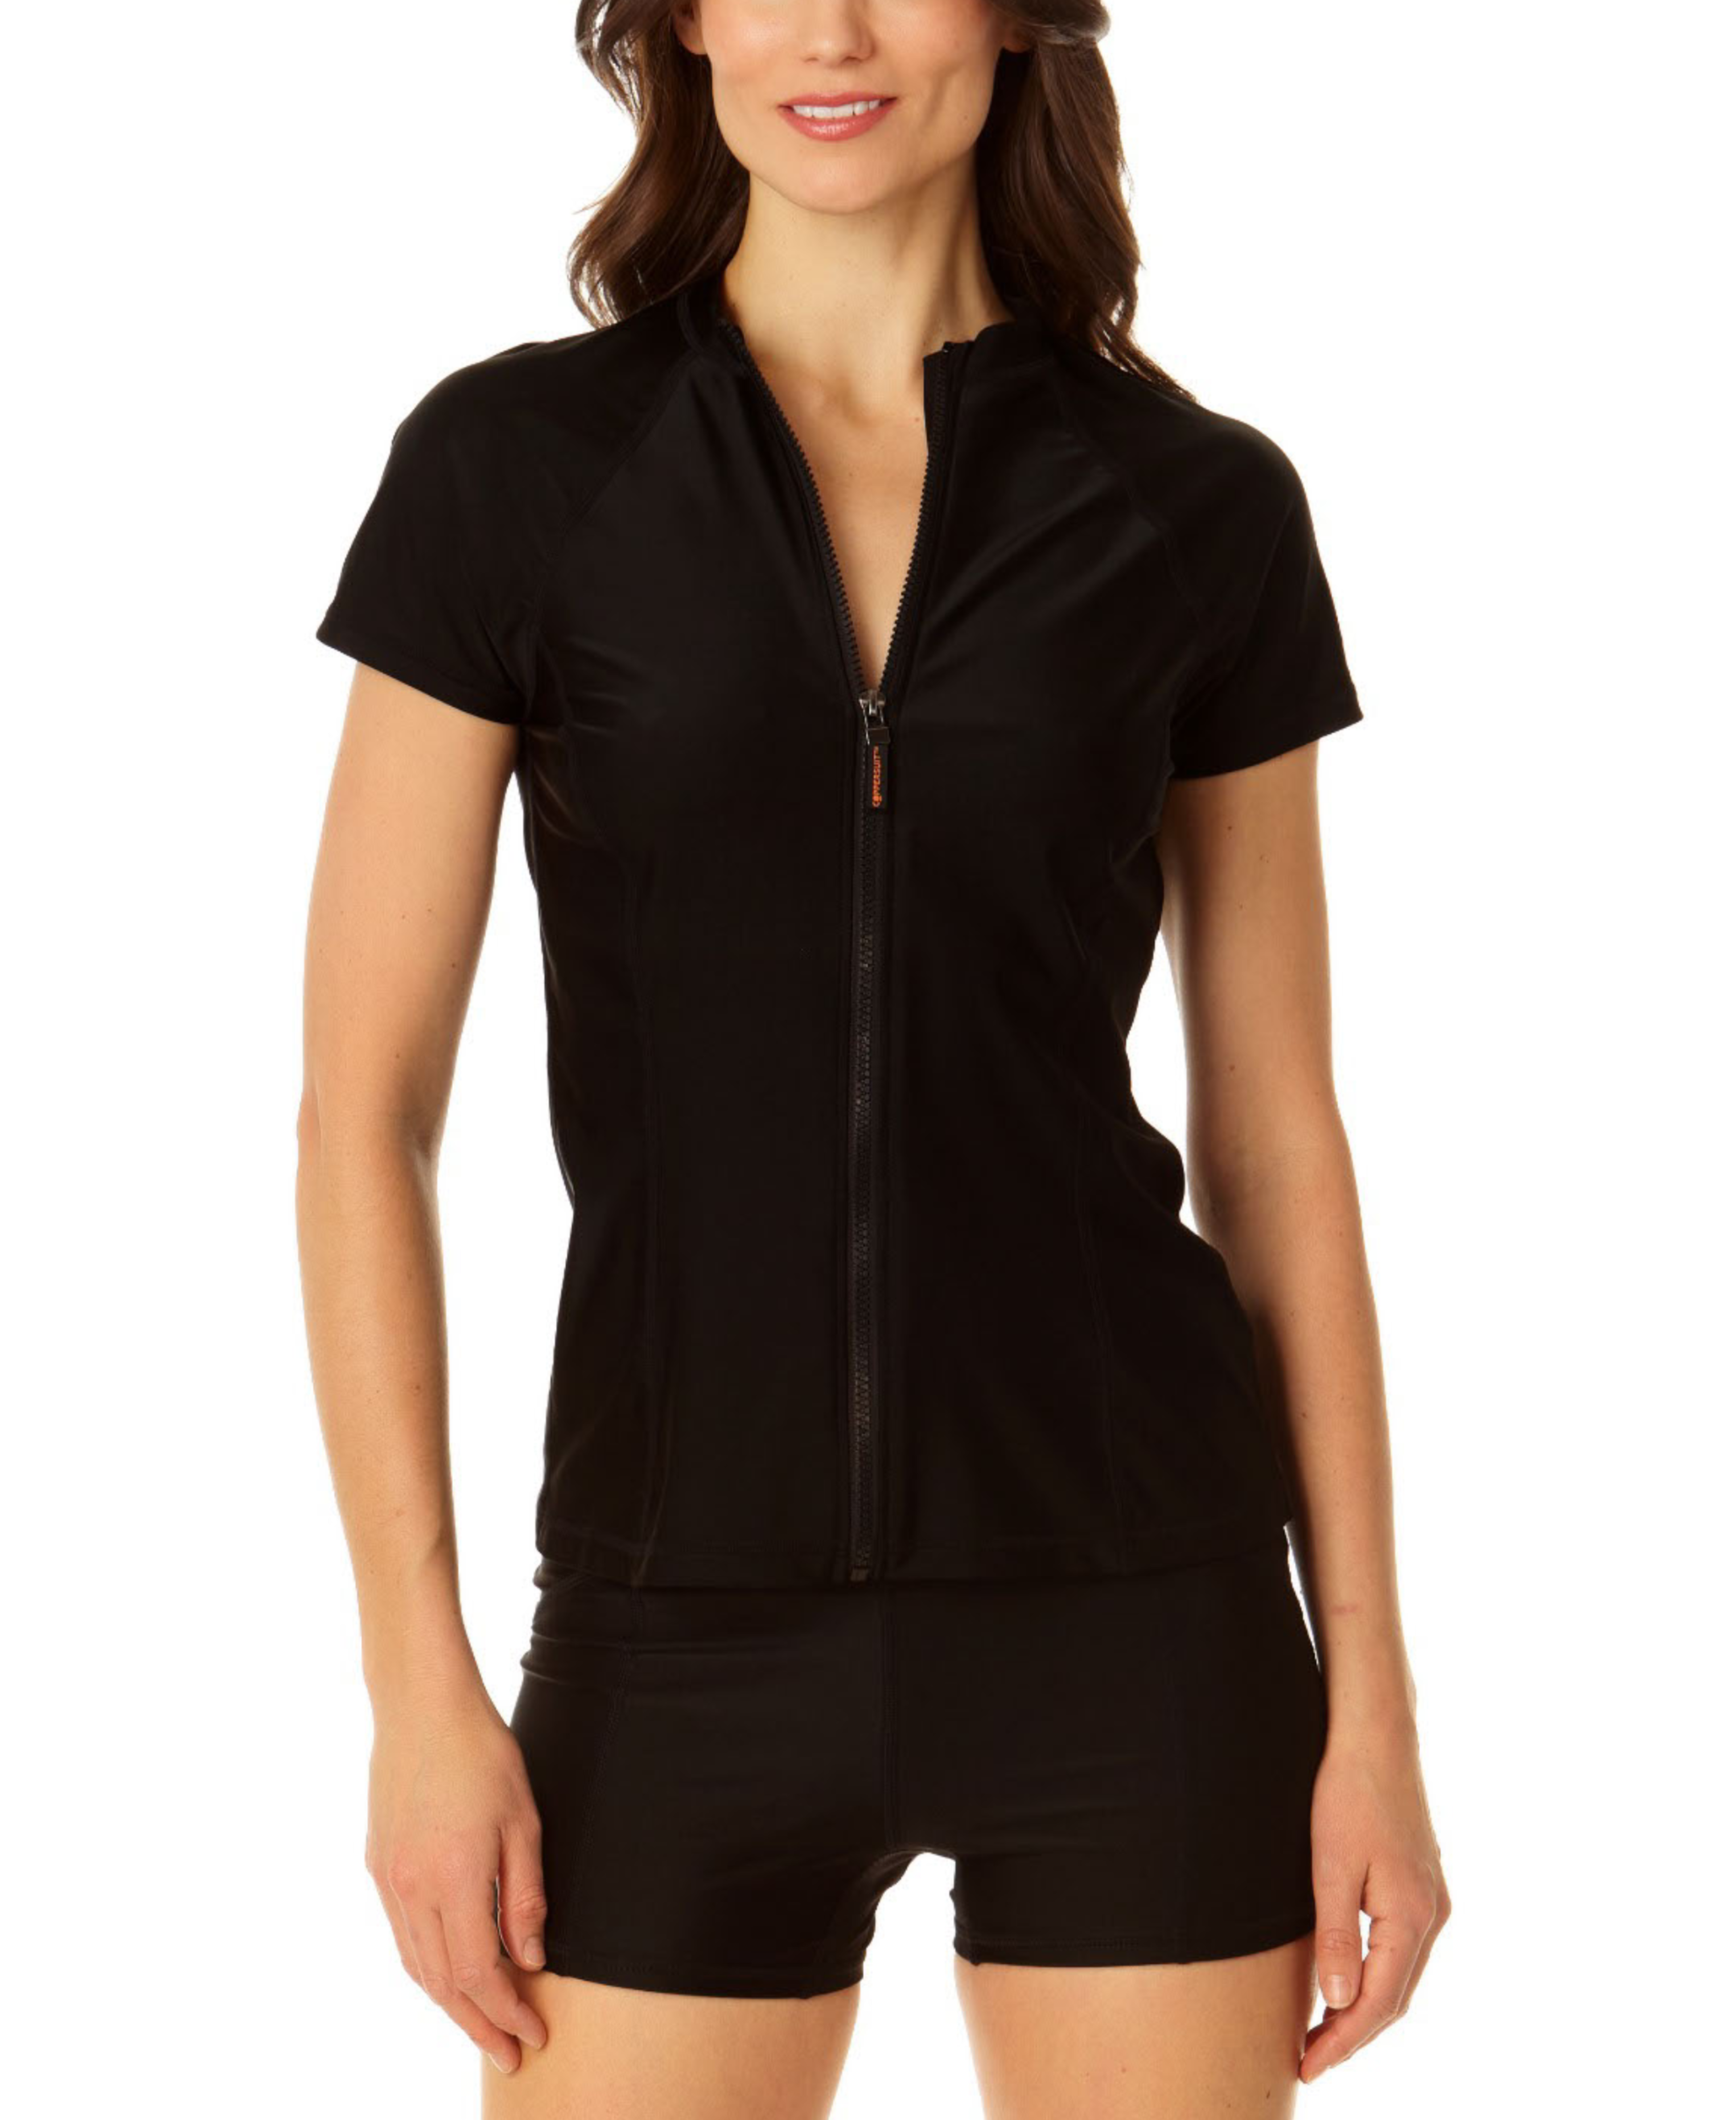 Women's Short Sleeve Zip Front Rashguard Swim Top in Black